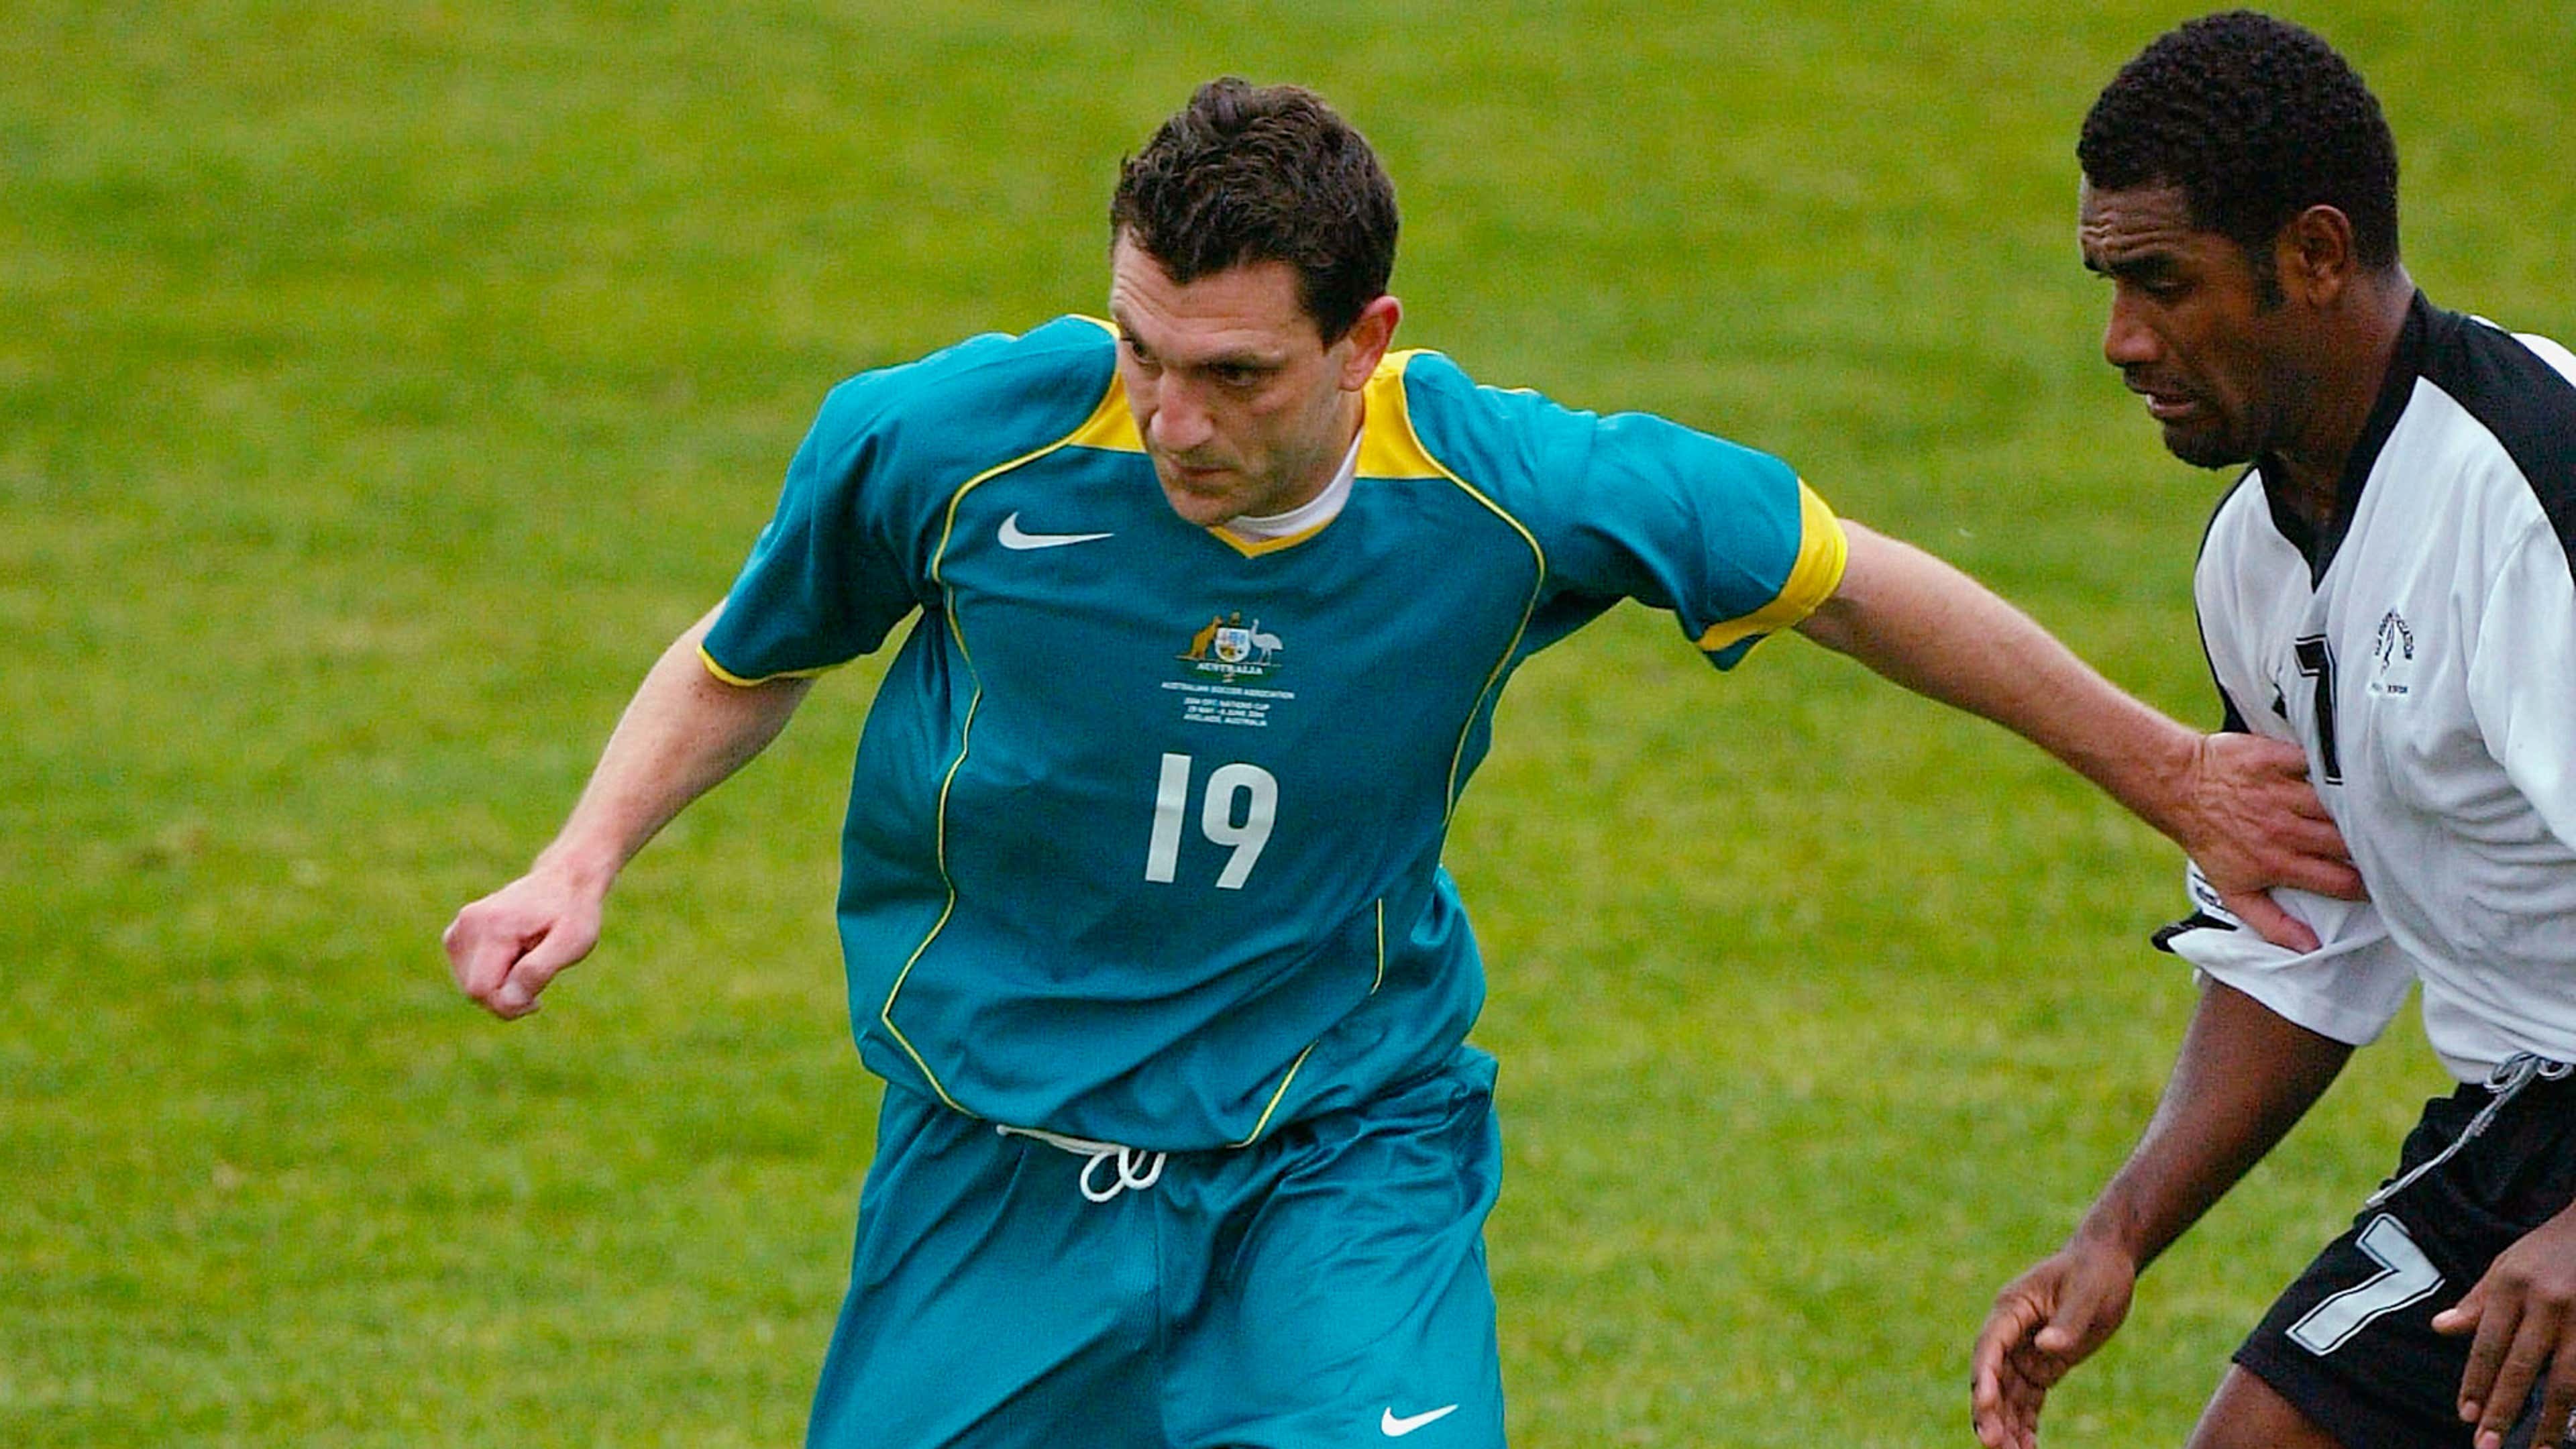 Max Vieri Australia Fiji OFC Nations Cup 2004